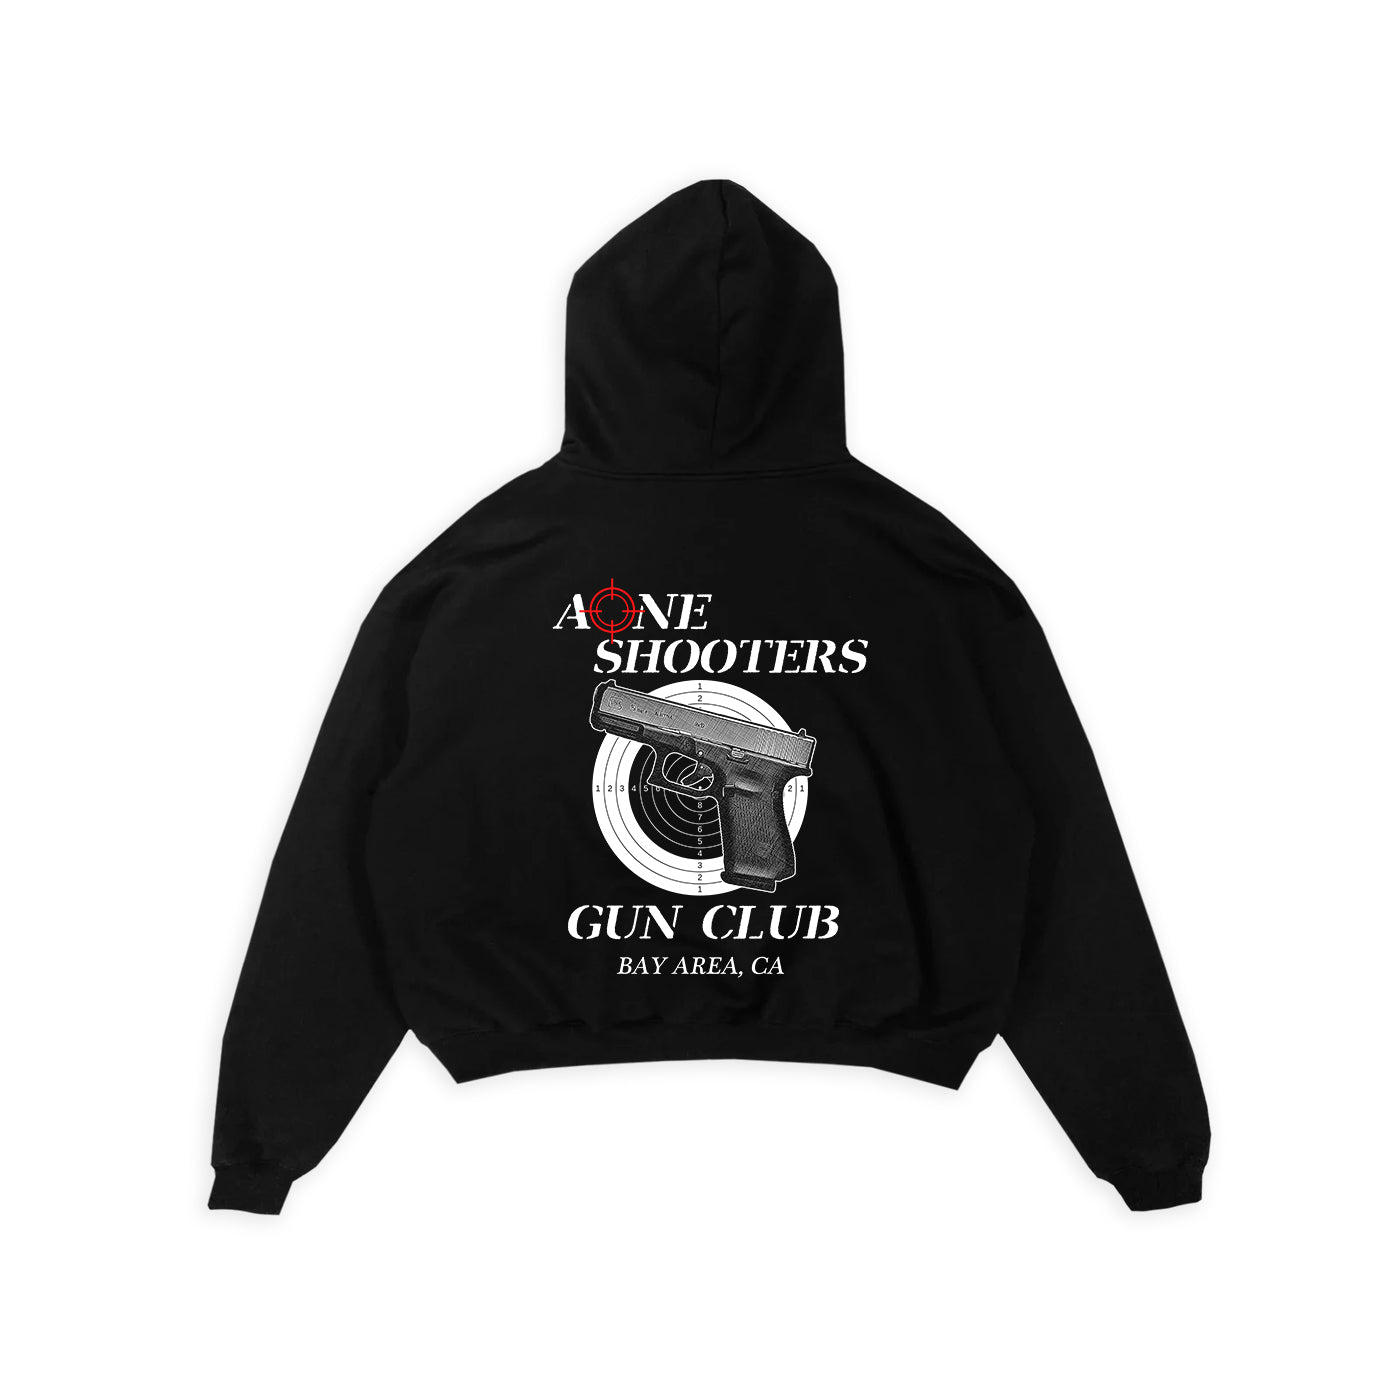 "A1 Shooters" Hooded Sweatshirt